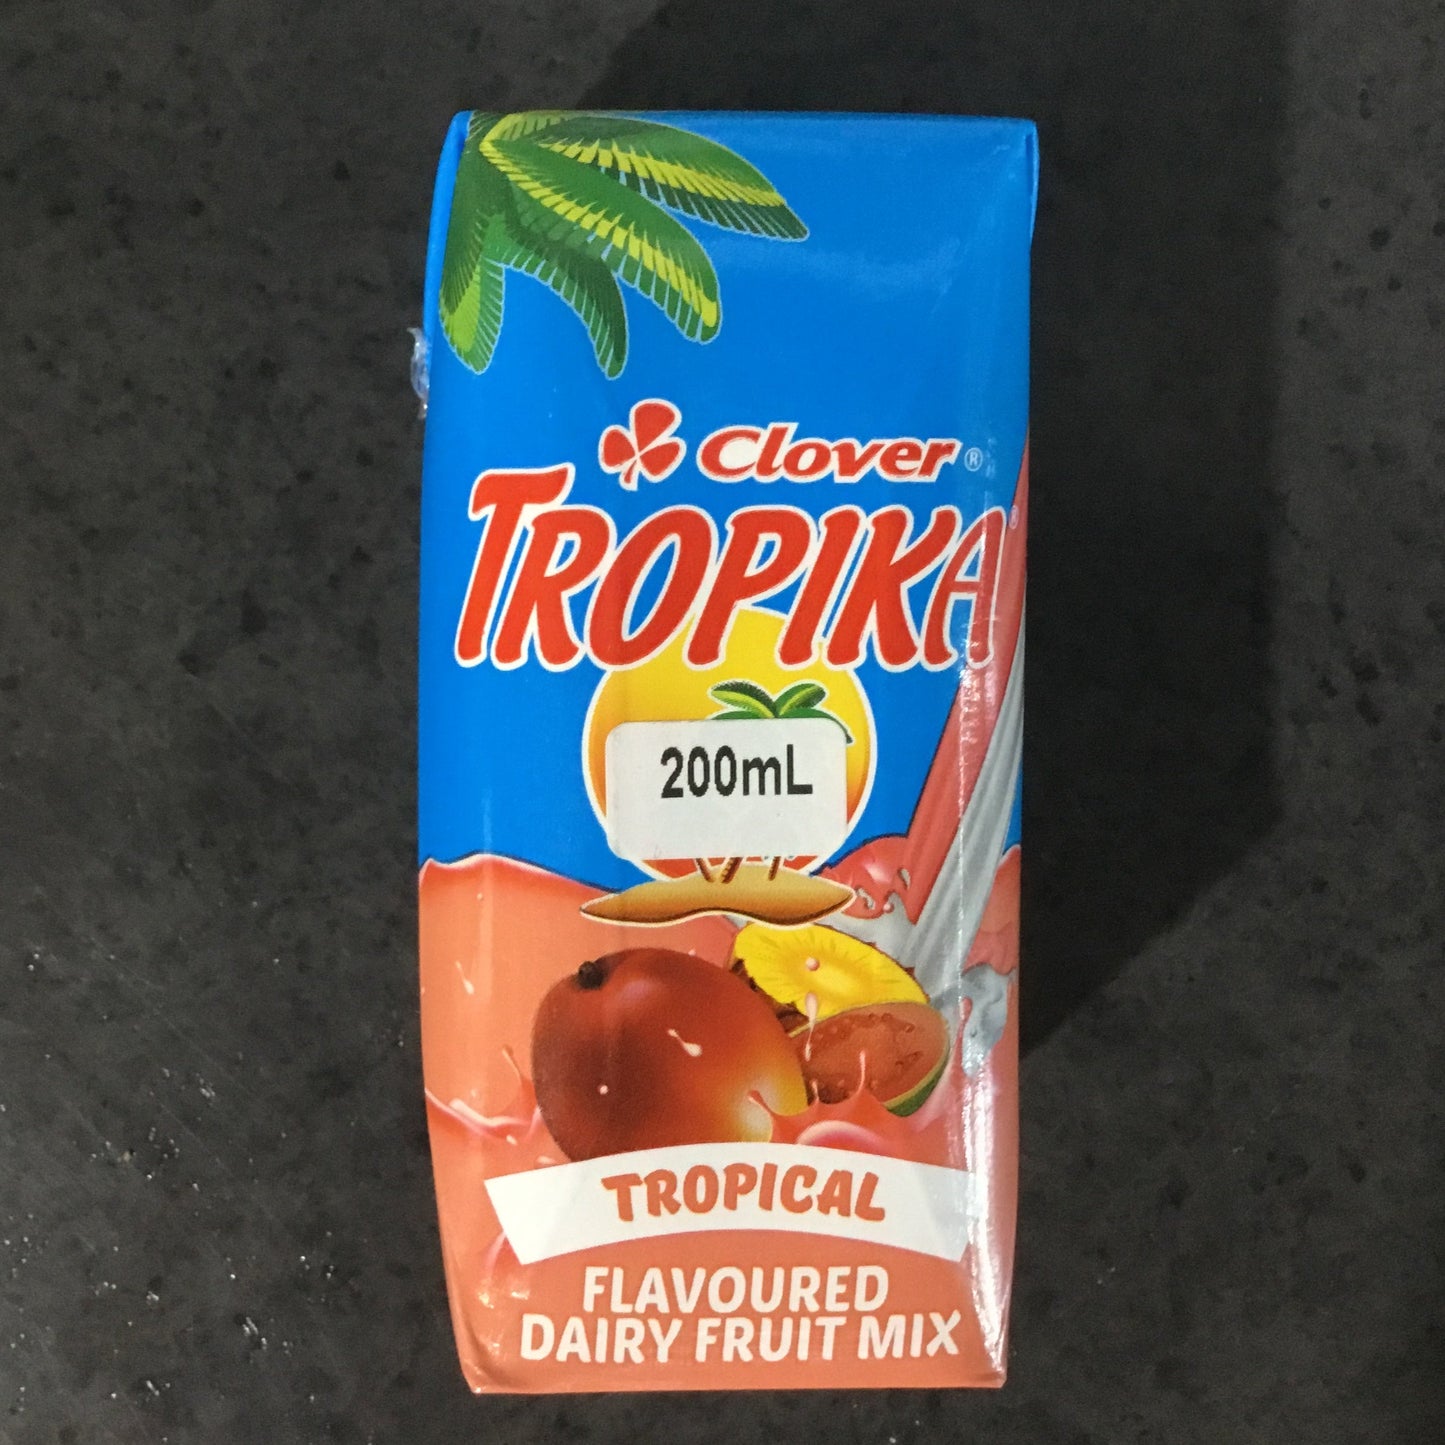 Tropika Tropical small 200ml